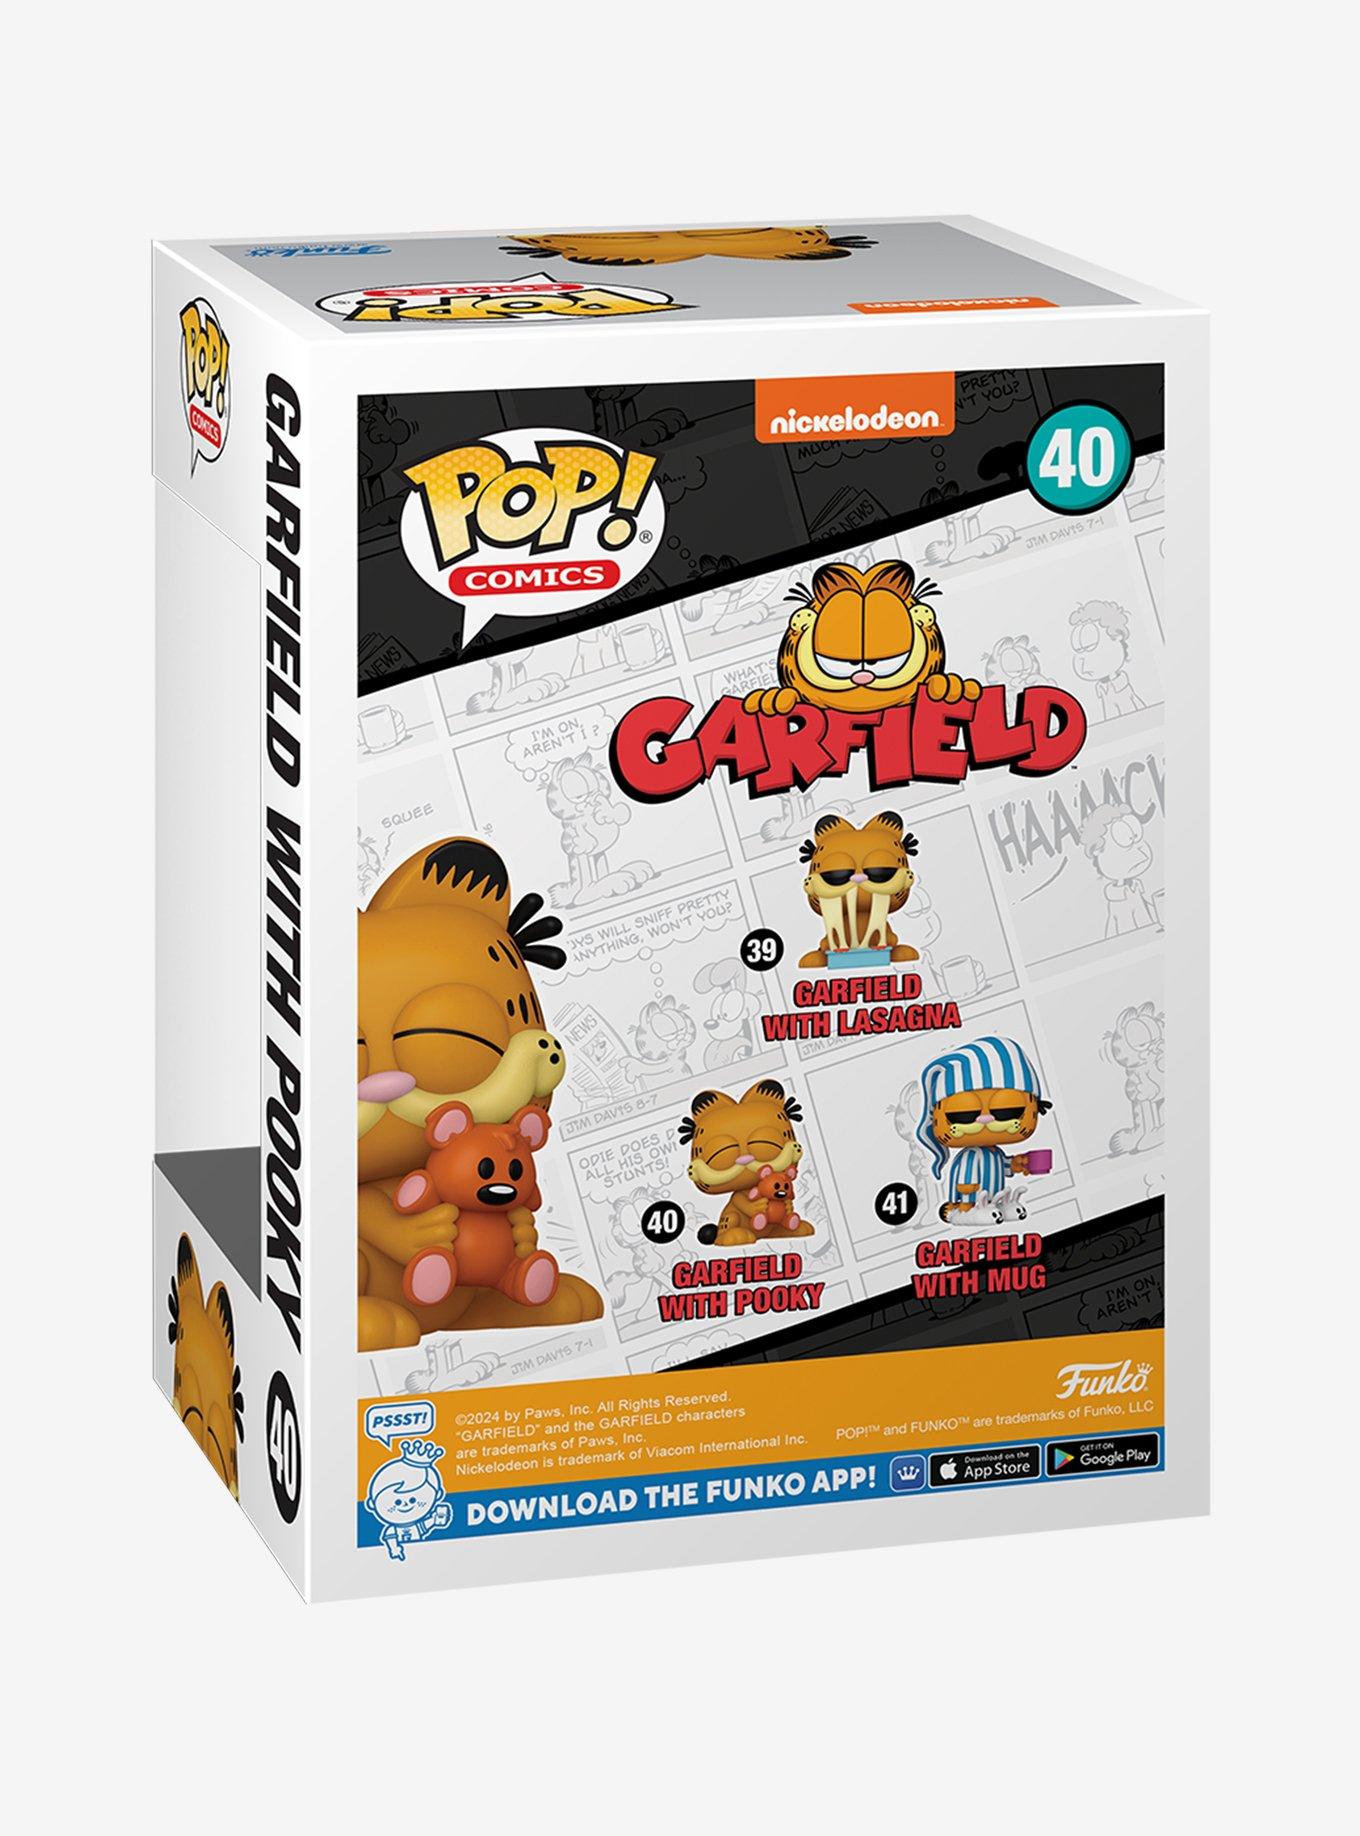 Funko Garfield Pop! Comics Garfield With Pooky Vinyl Figure, , alternate